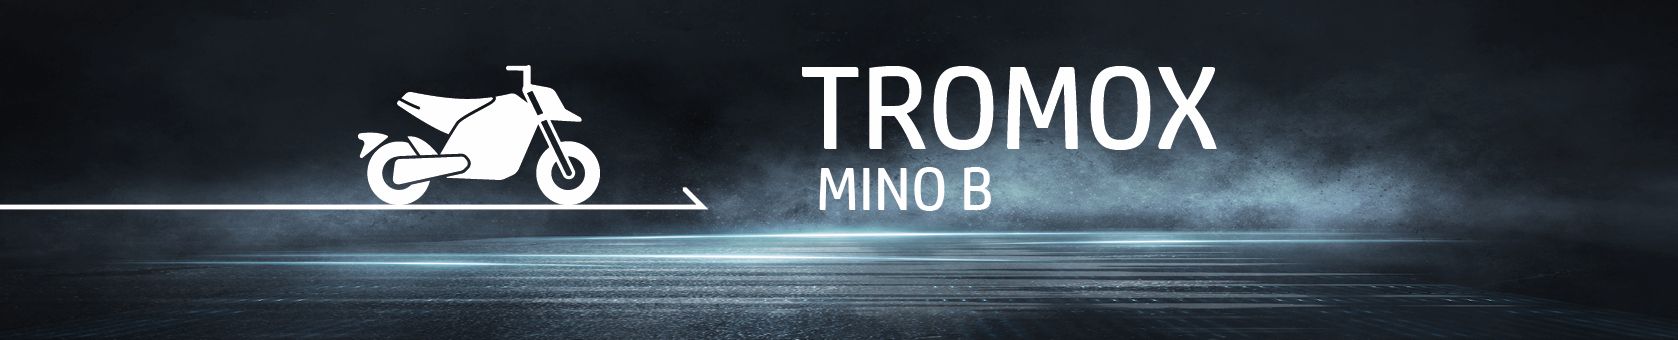 TROMOX Mino B